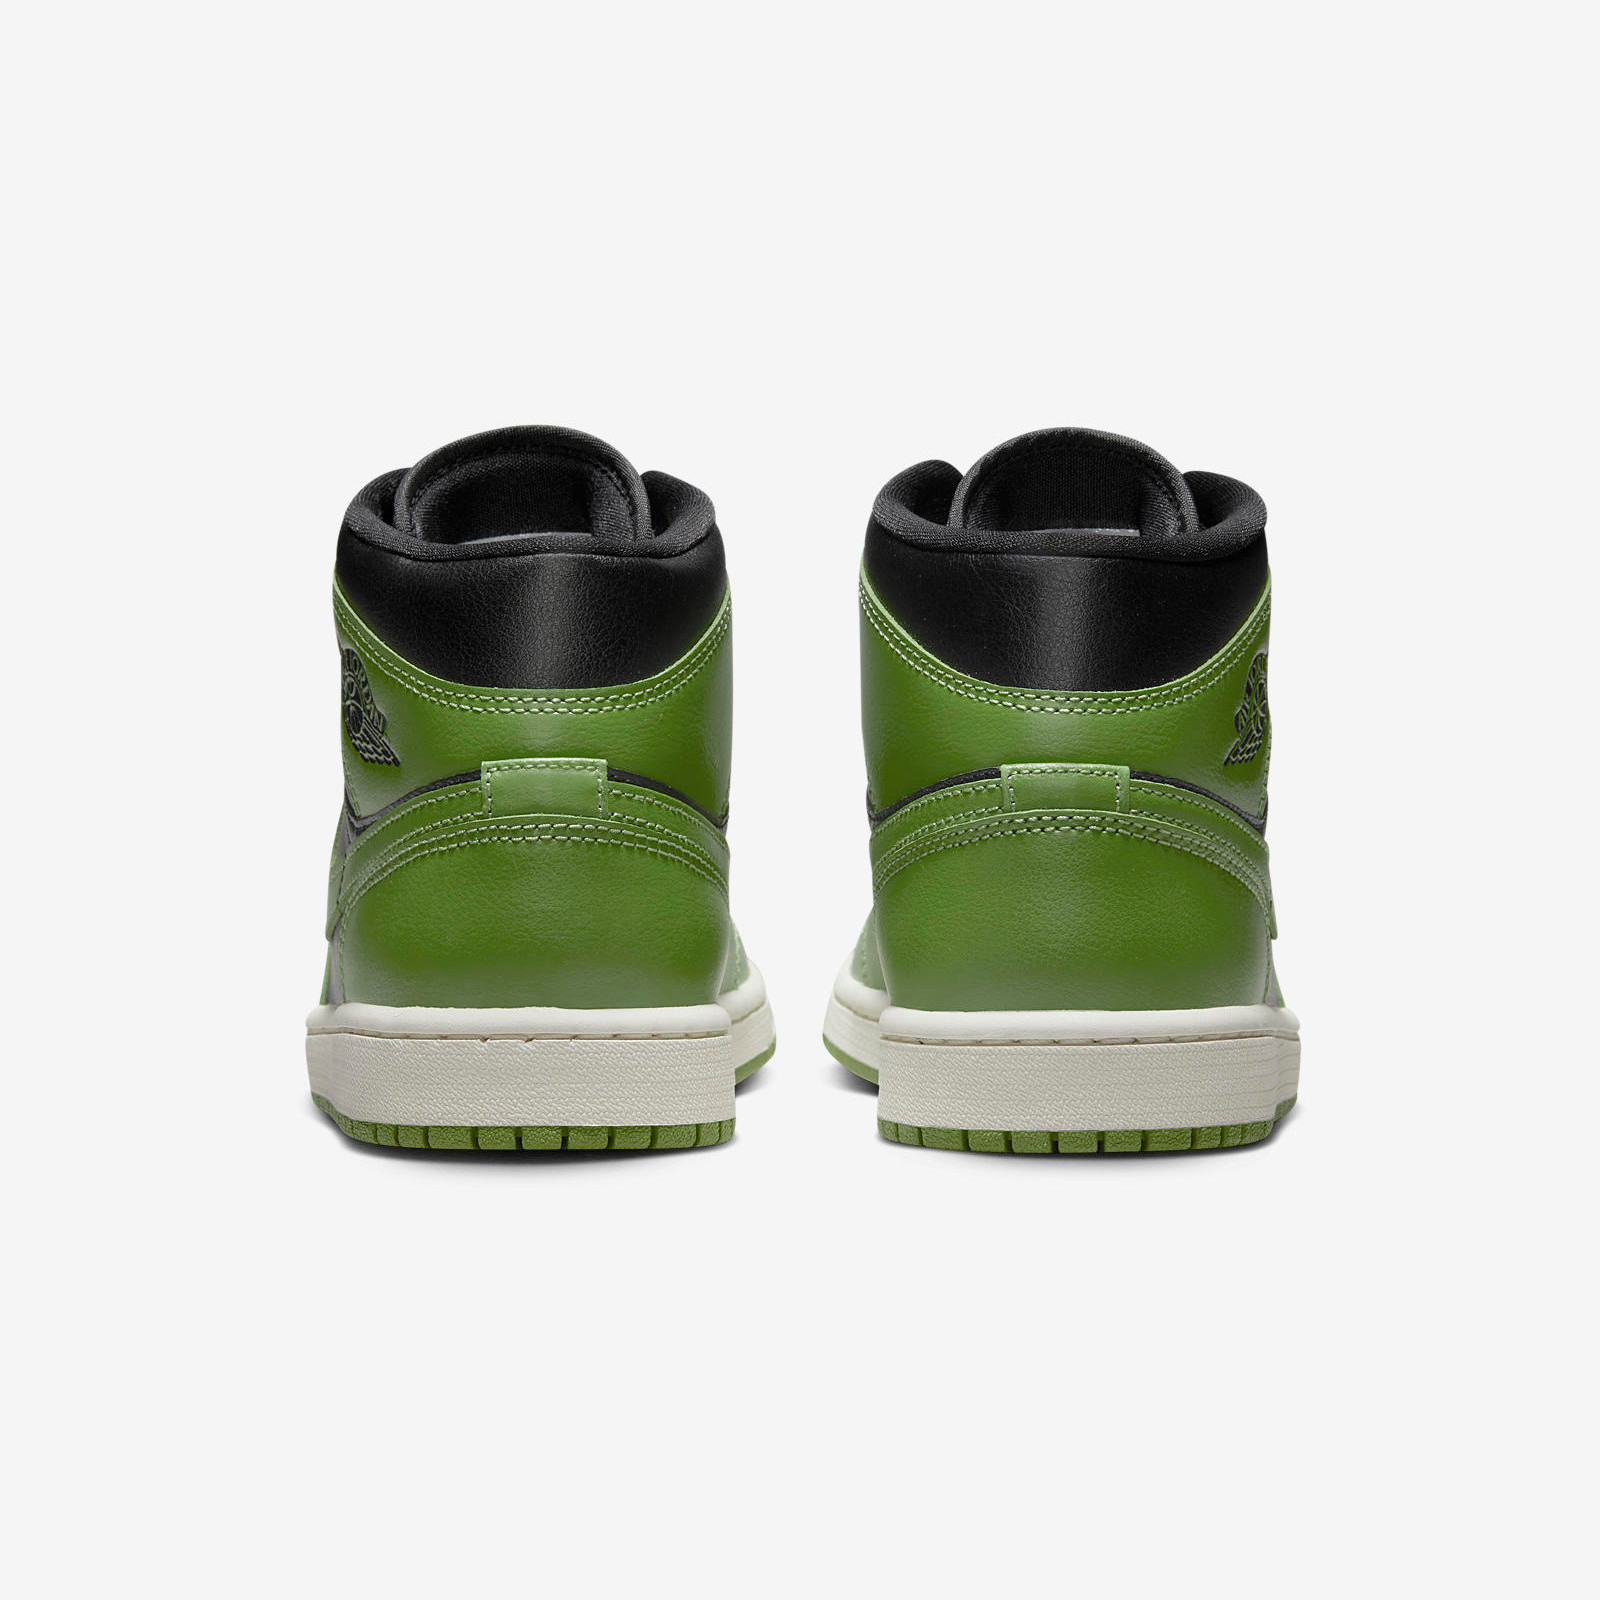 Air Jordan 1 Mid
Black / Green